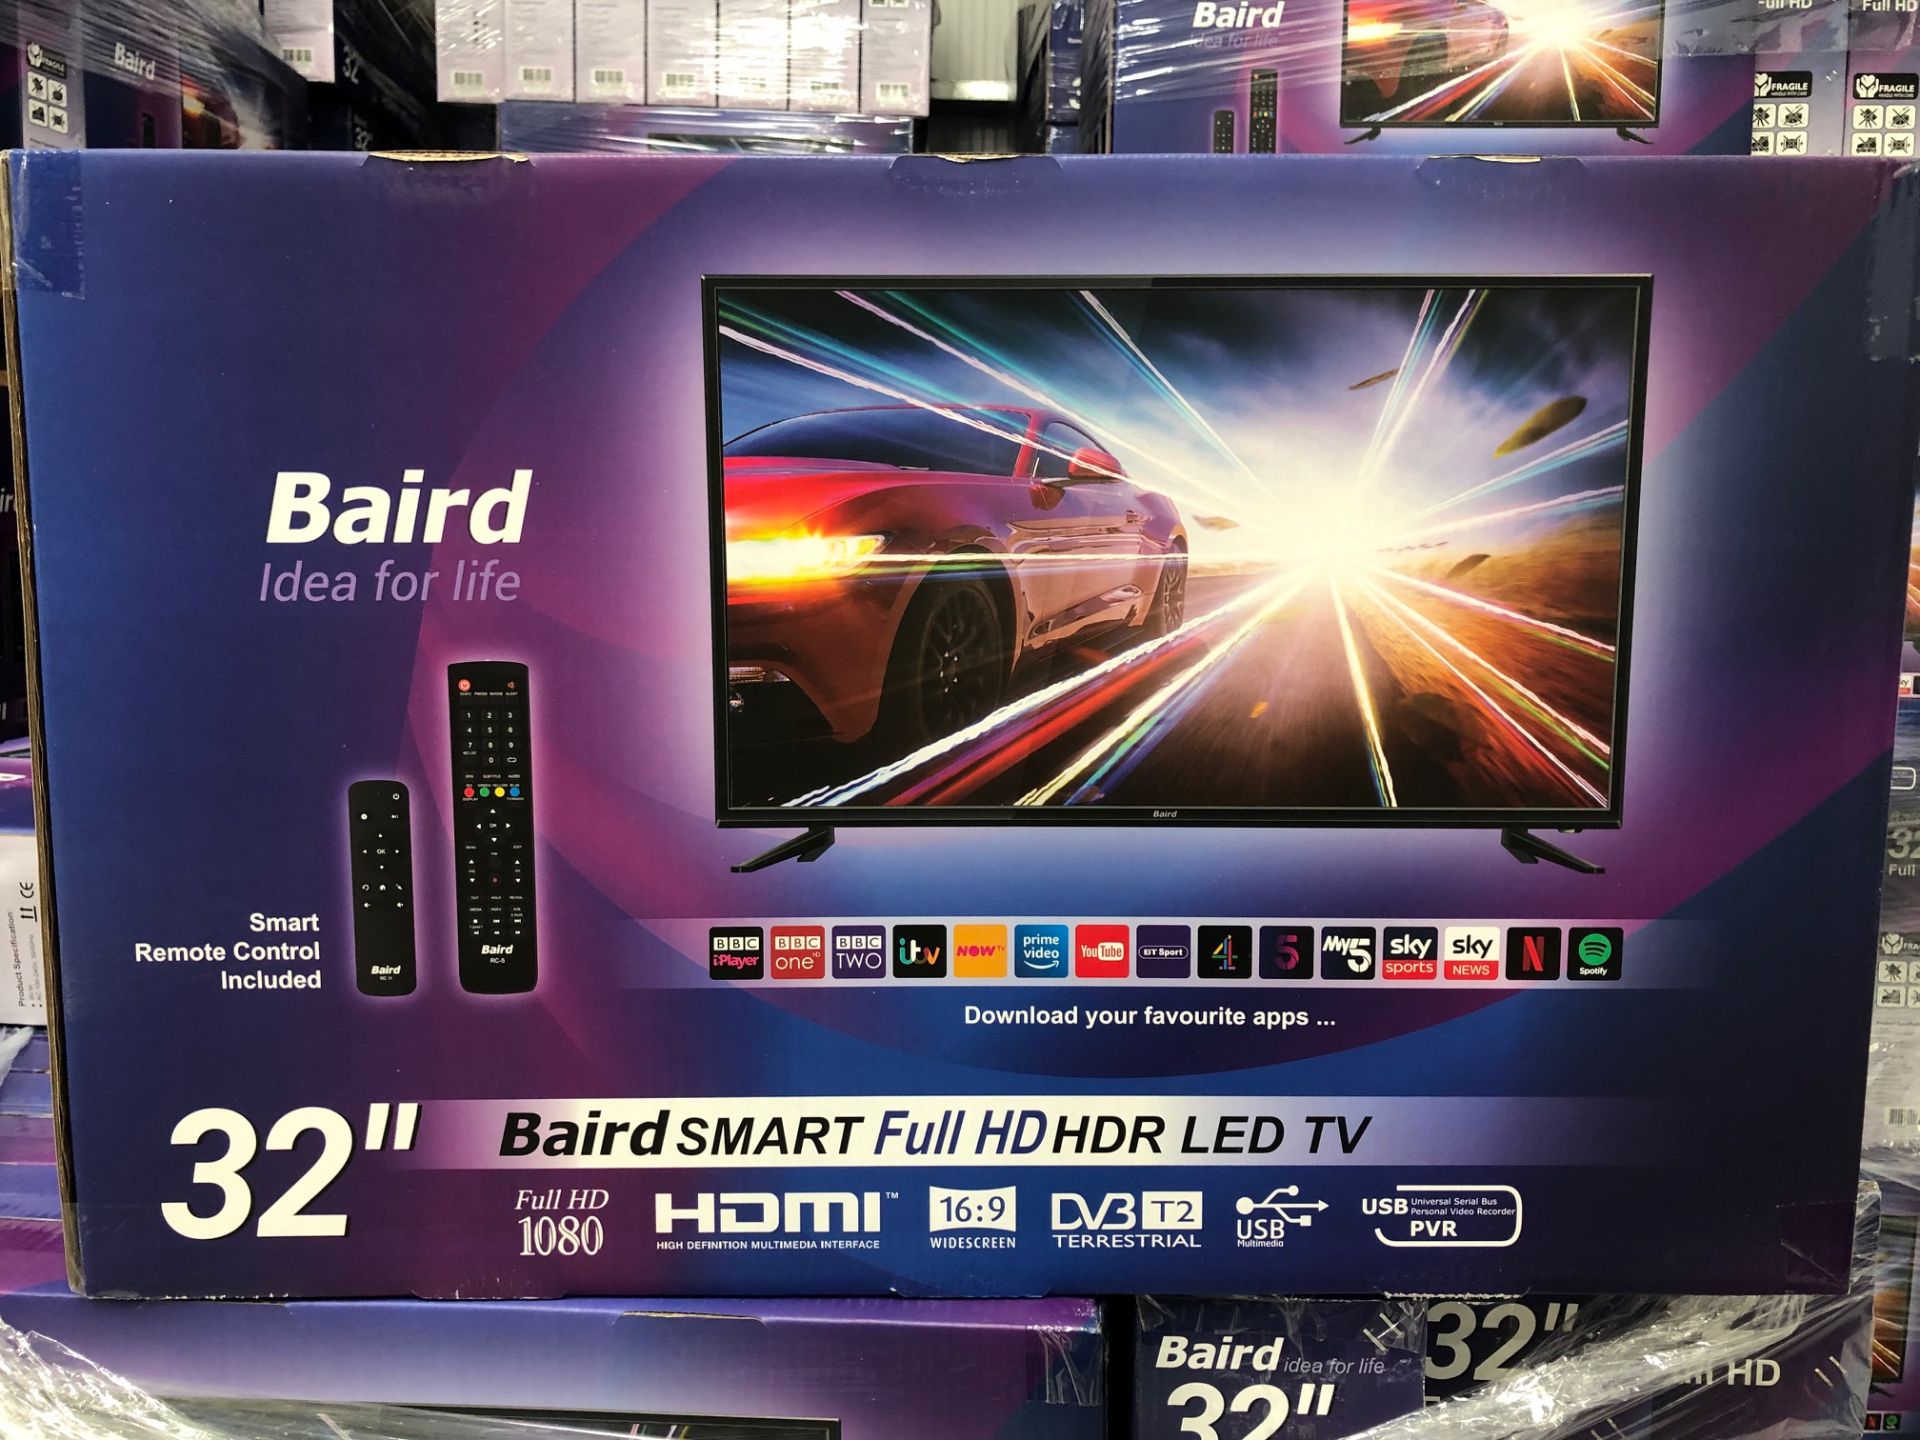 Ten Boxed Unused Baird 32" FULL HD TV's with built